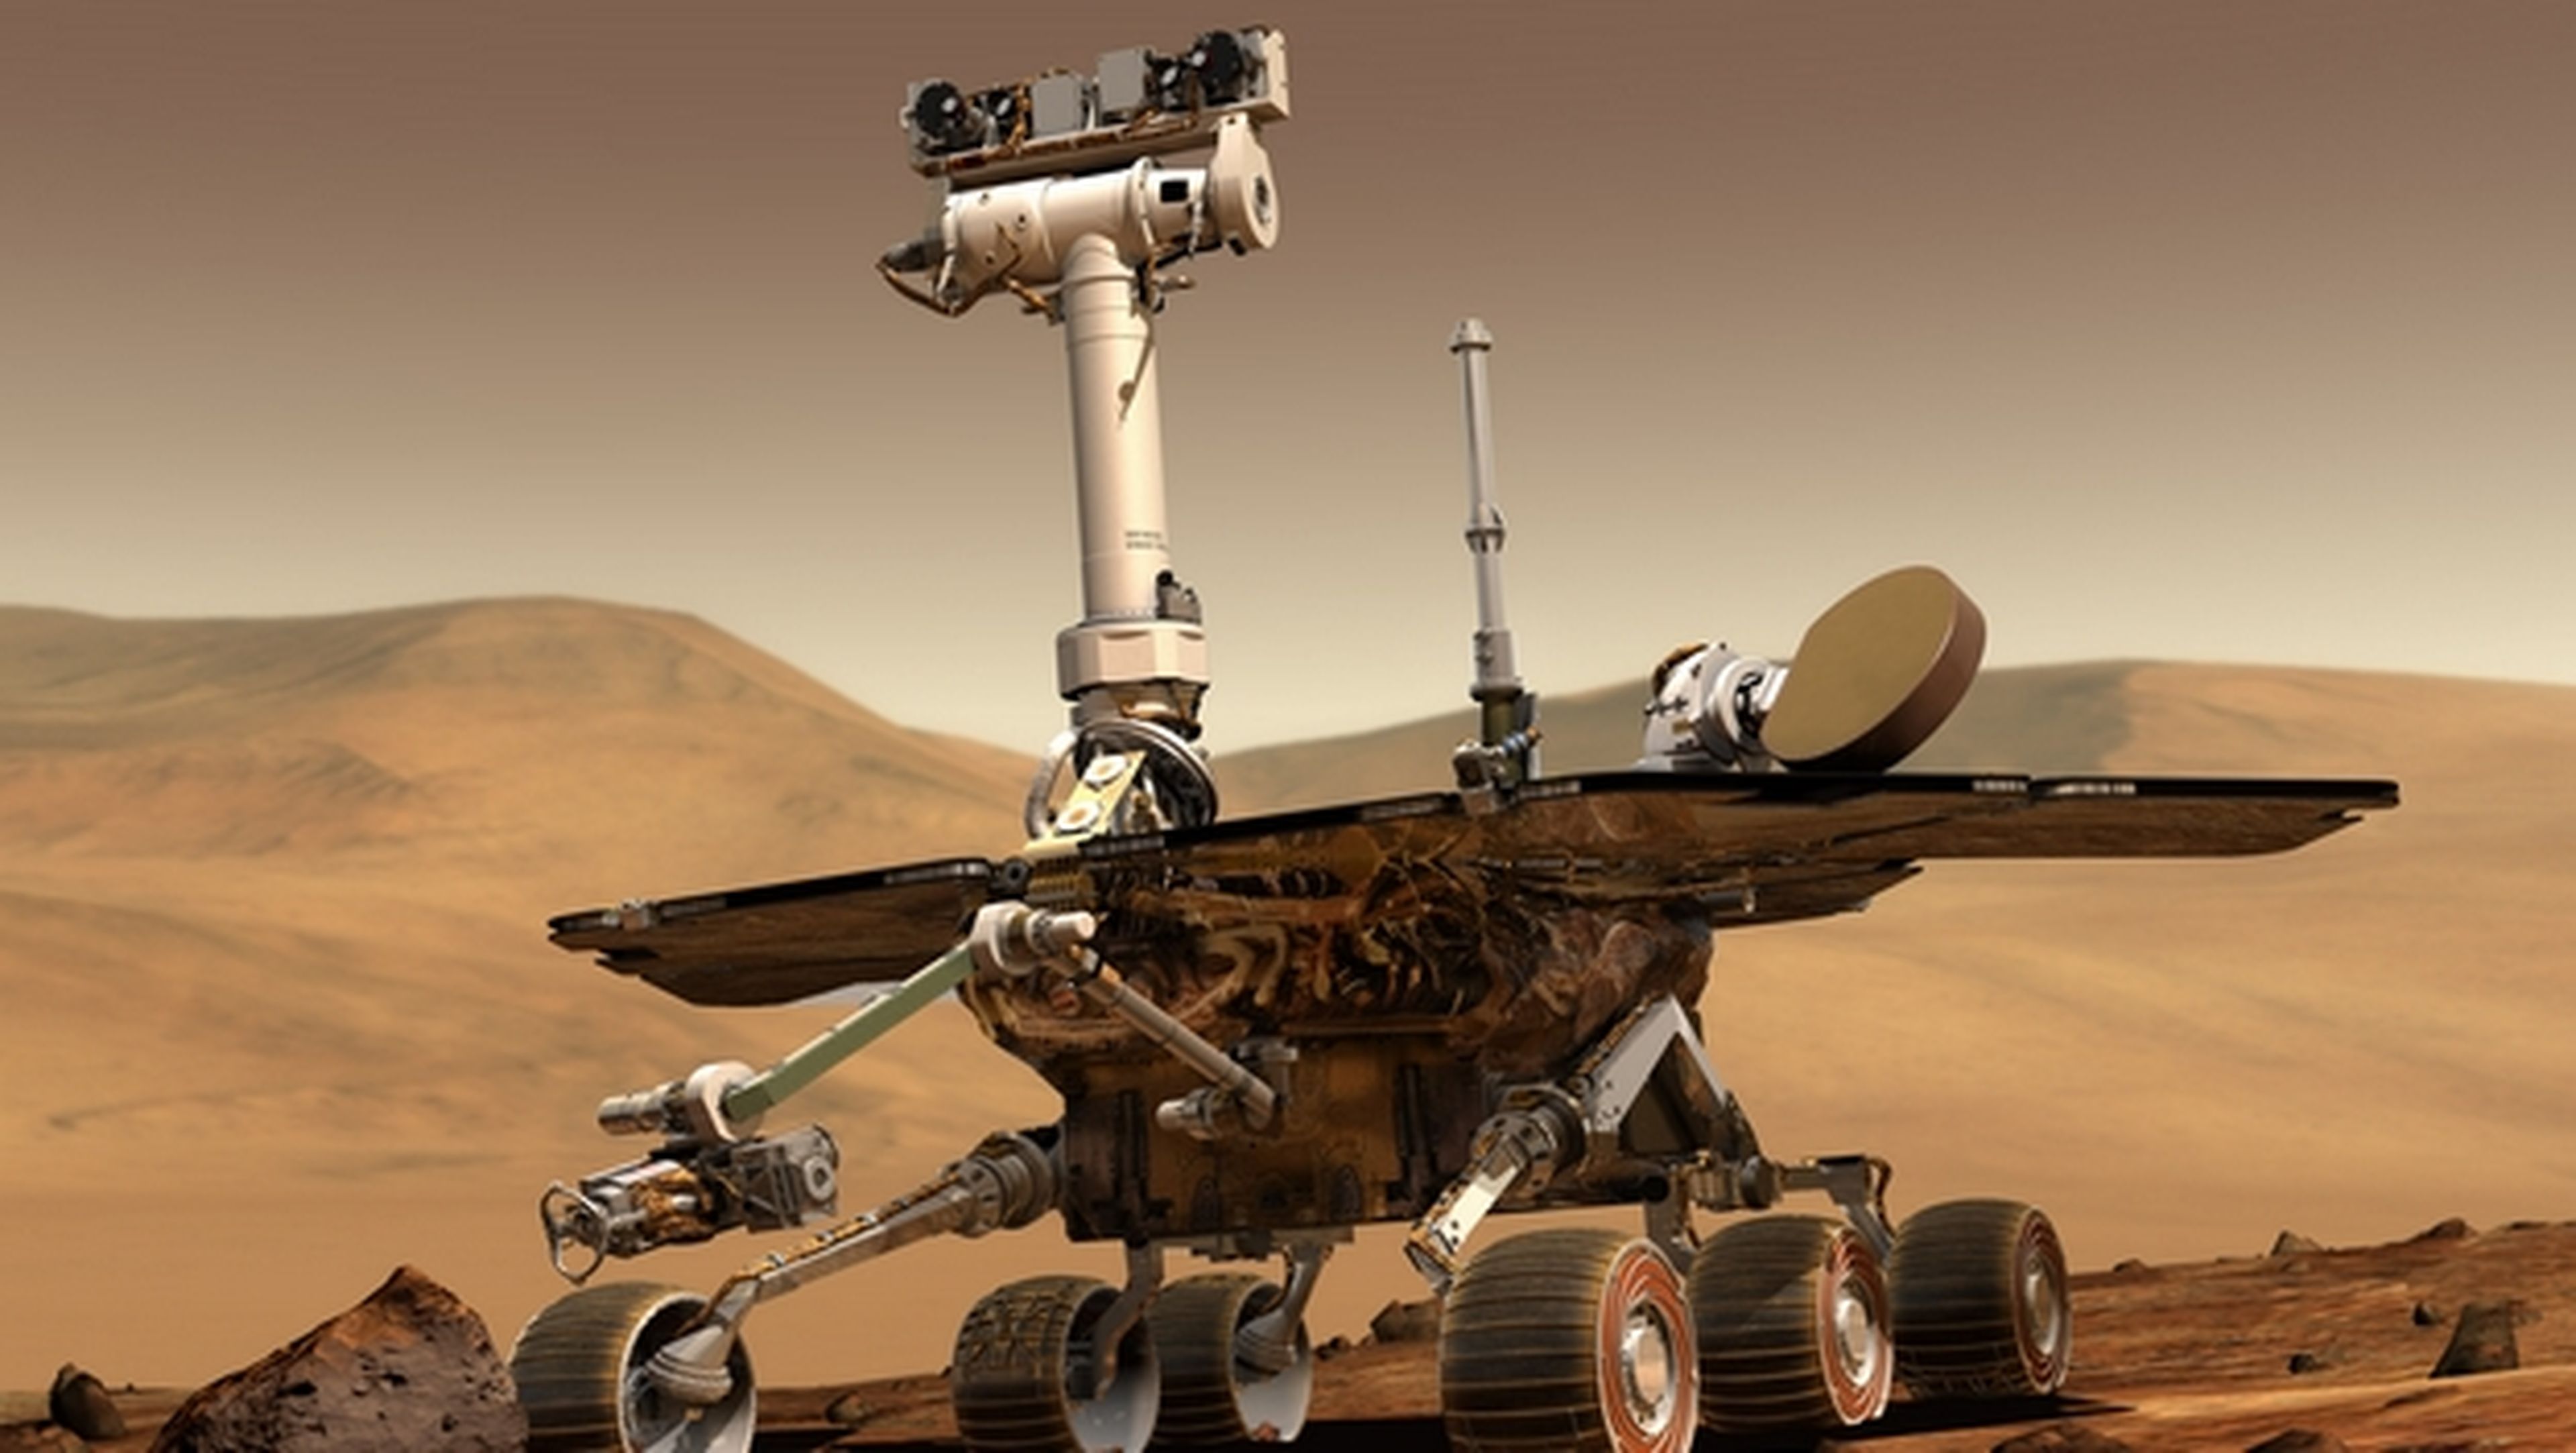 Formatean la memoria Flash de 256 MB del robot Rover, el Oportunity... a 200 millones de Km en Marte.